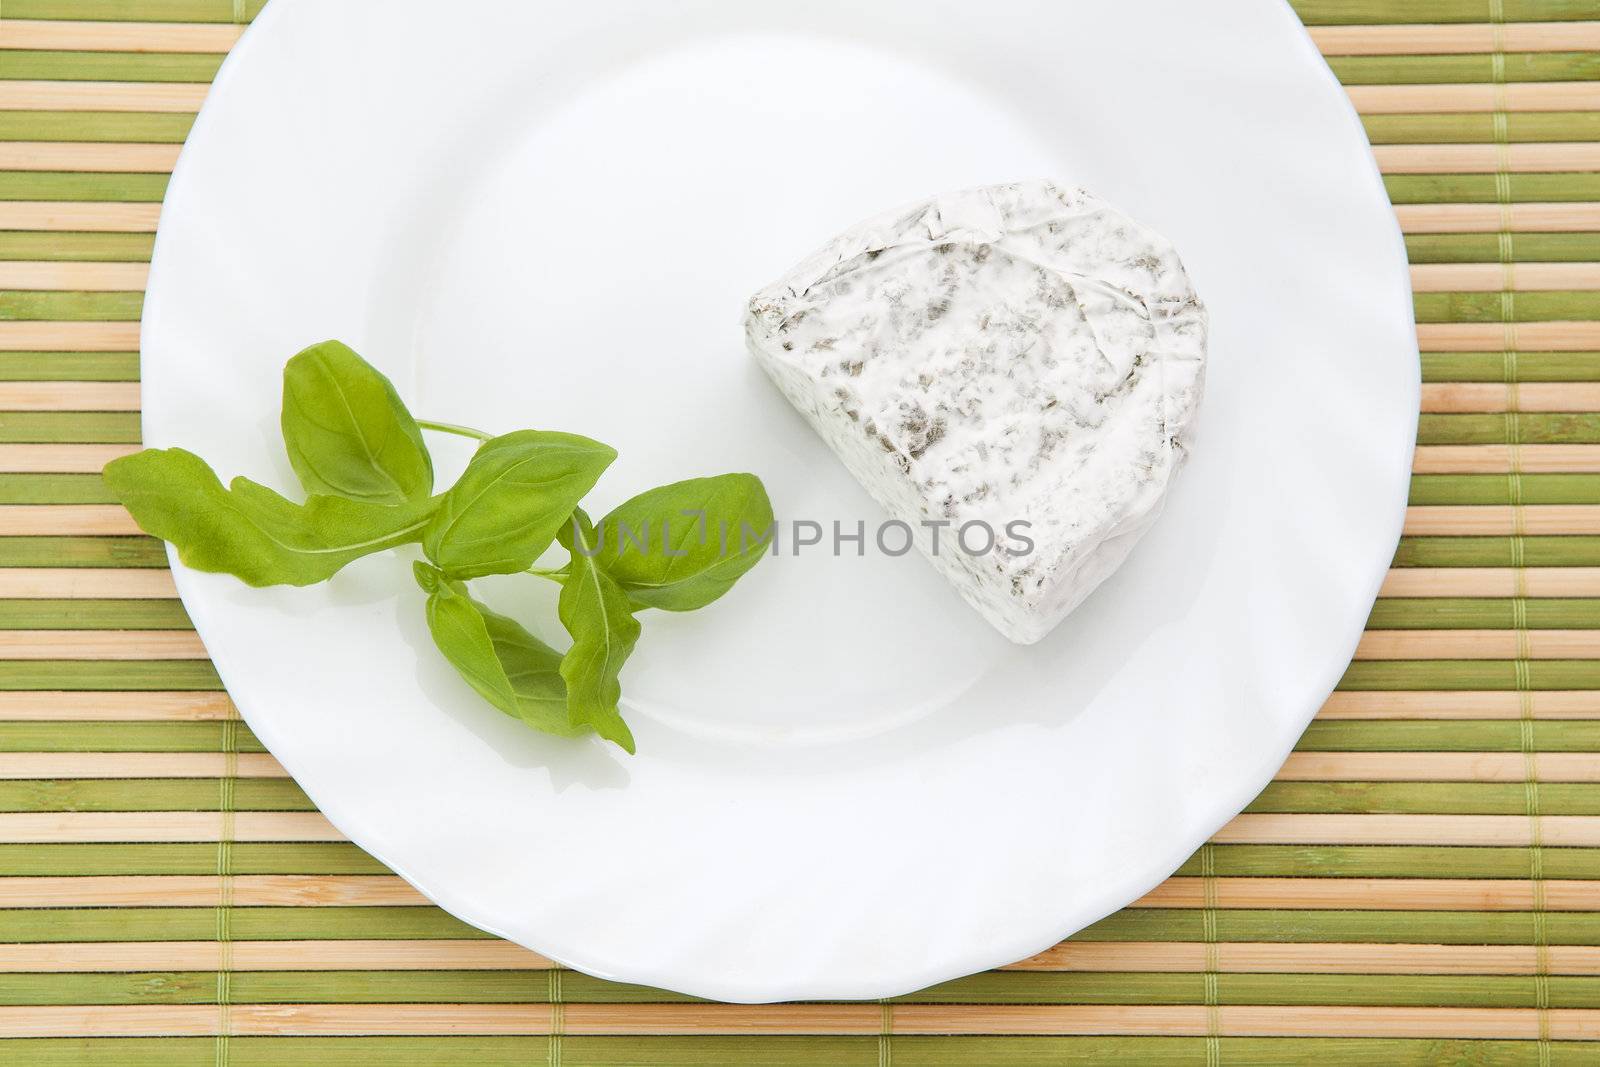 Blue cheese and fresh basil